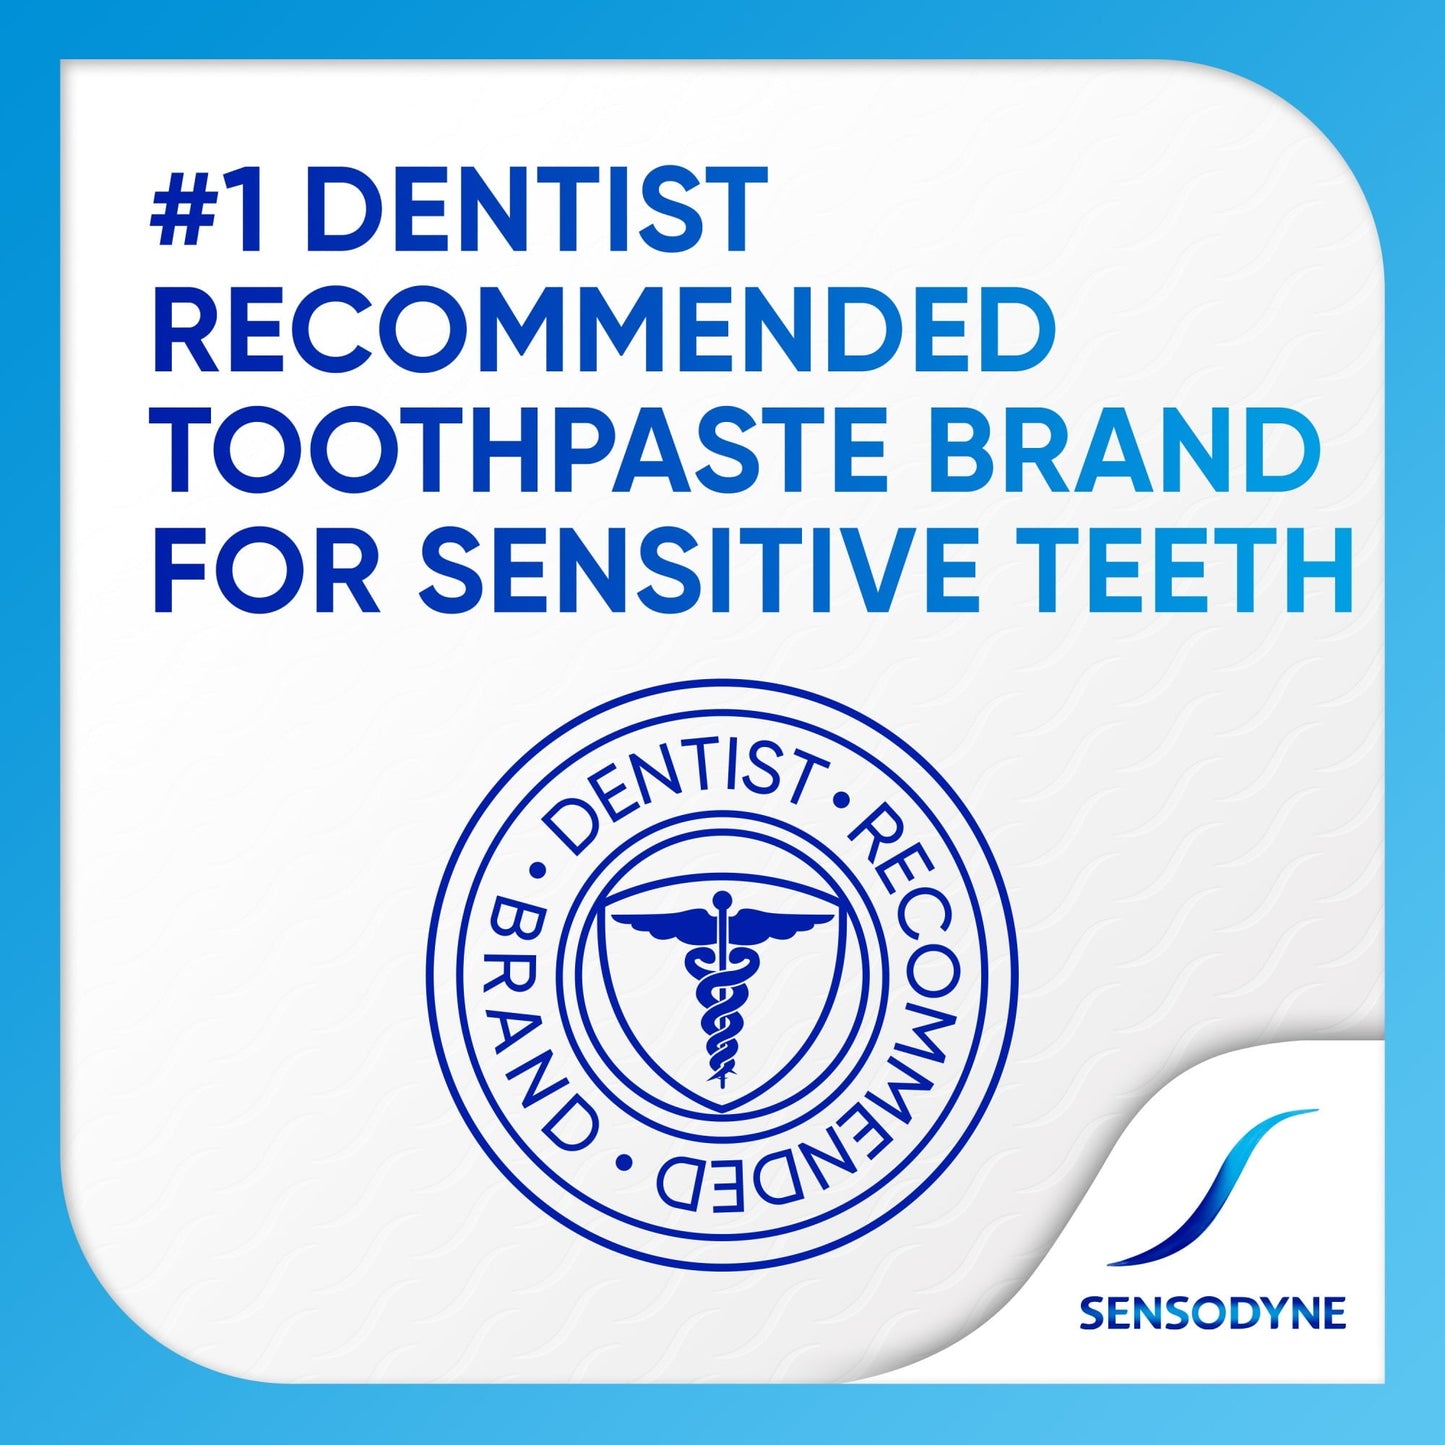 Sensodyne Complete Protection Sensitive Toothpaste, Extra Fresh, 3.4 Oz, 2 Pack